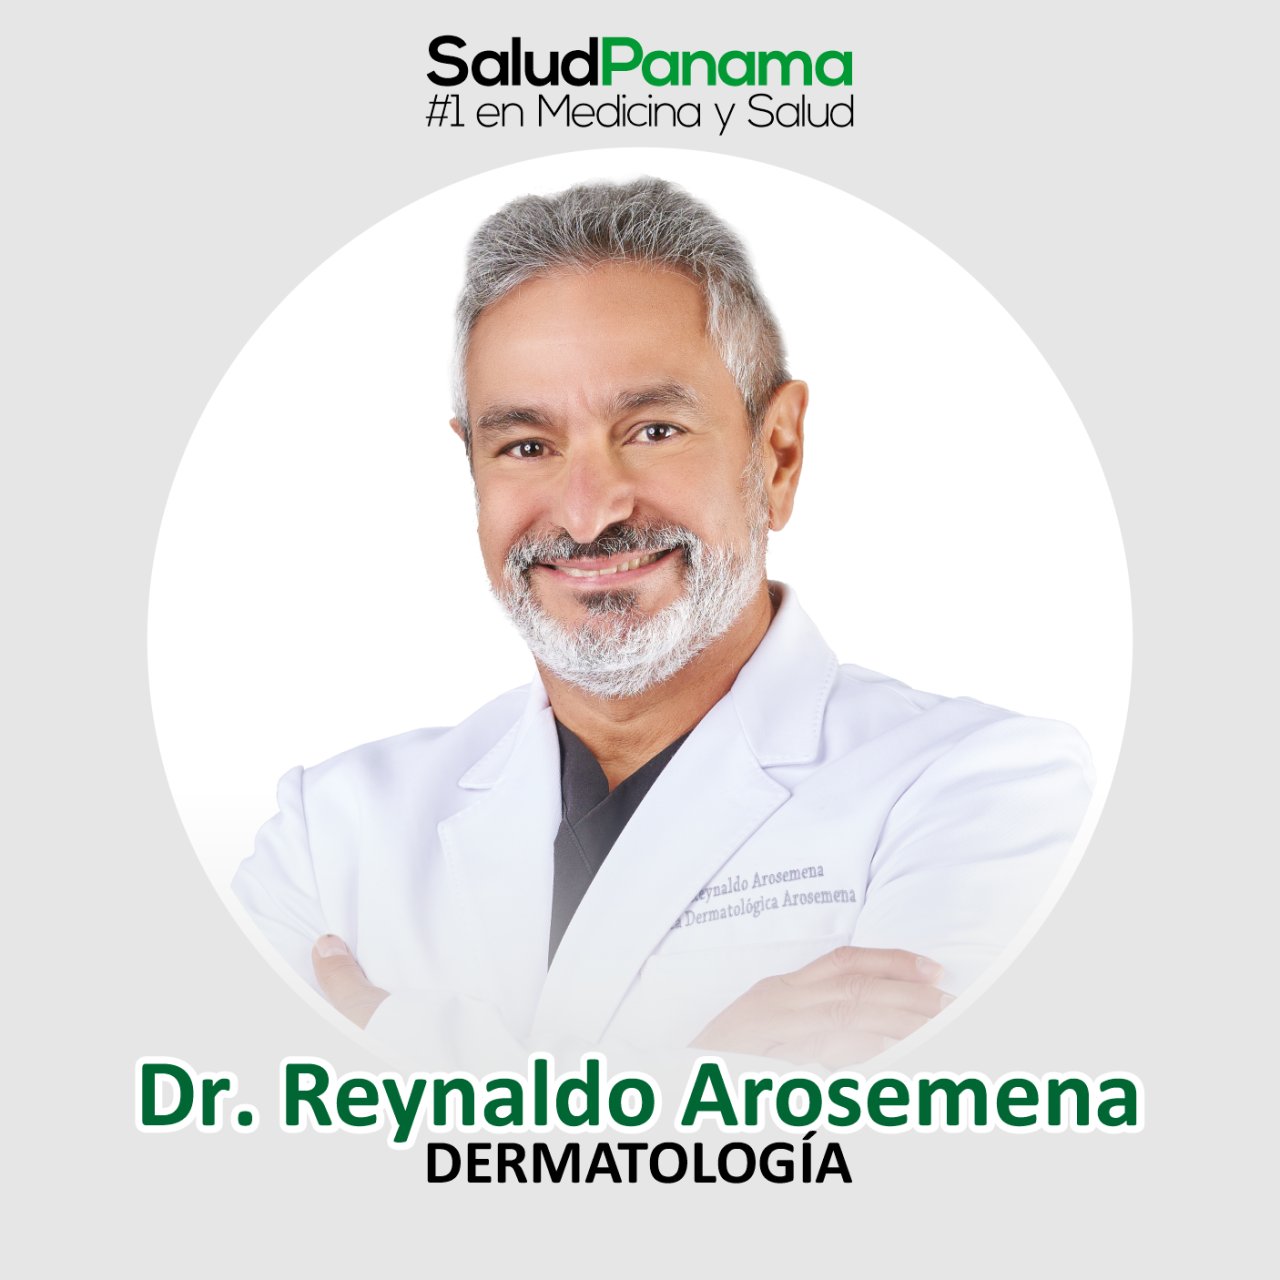 Dr. Reynaldo Arosemena